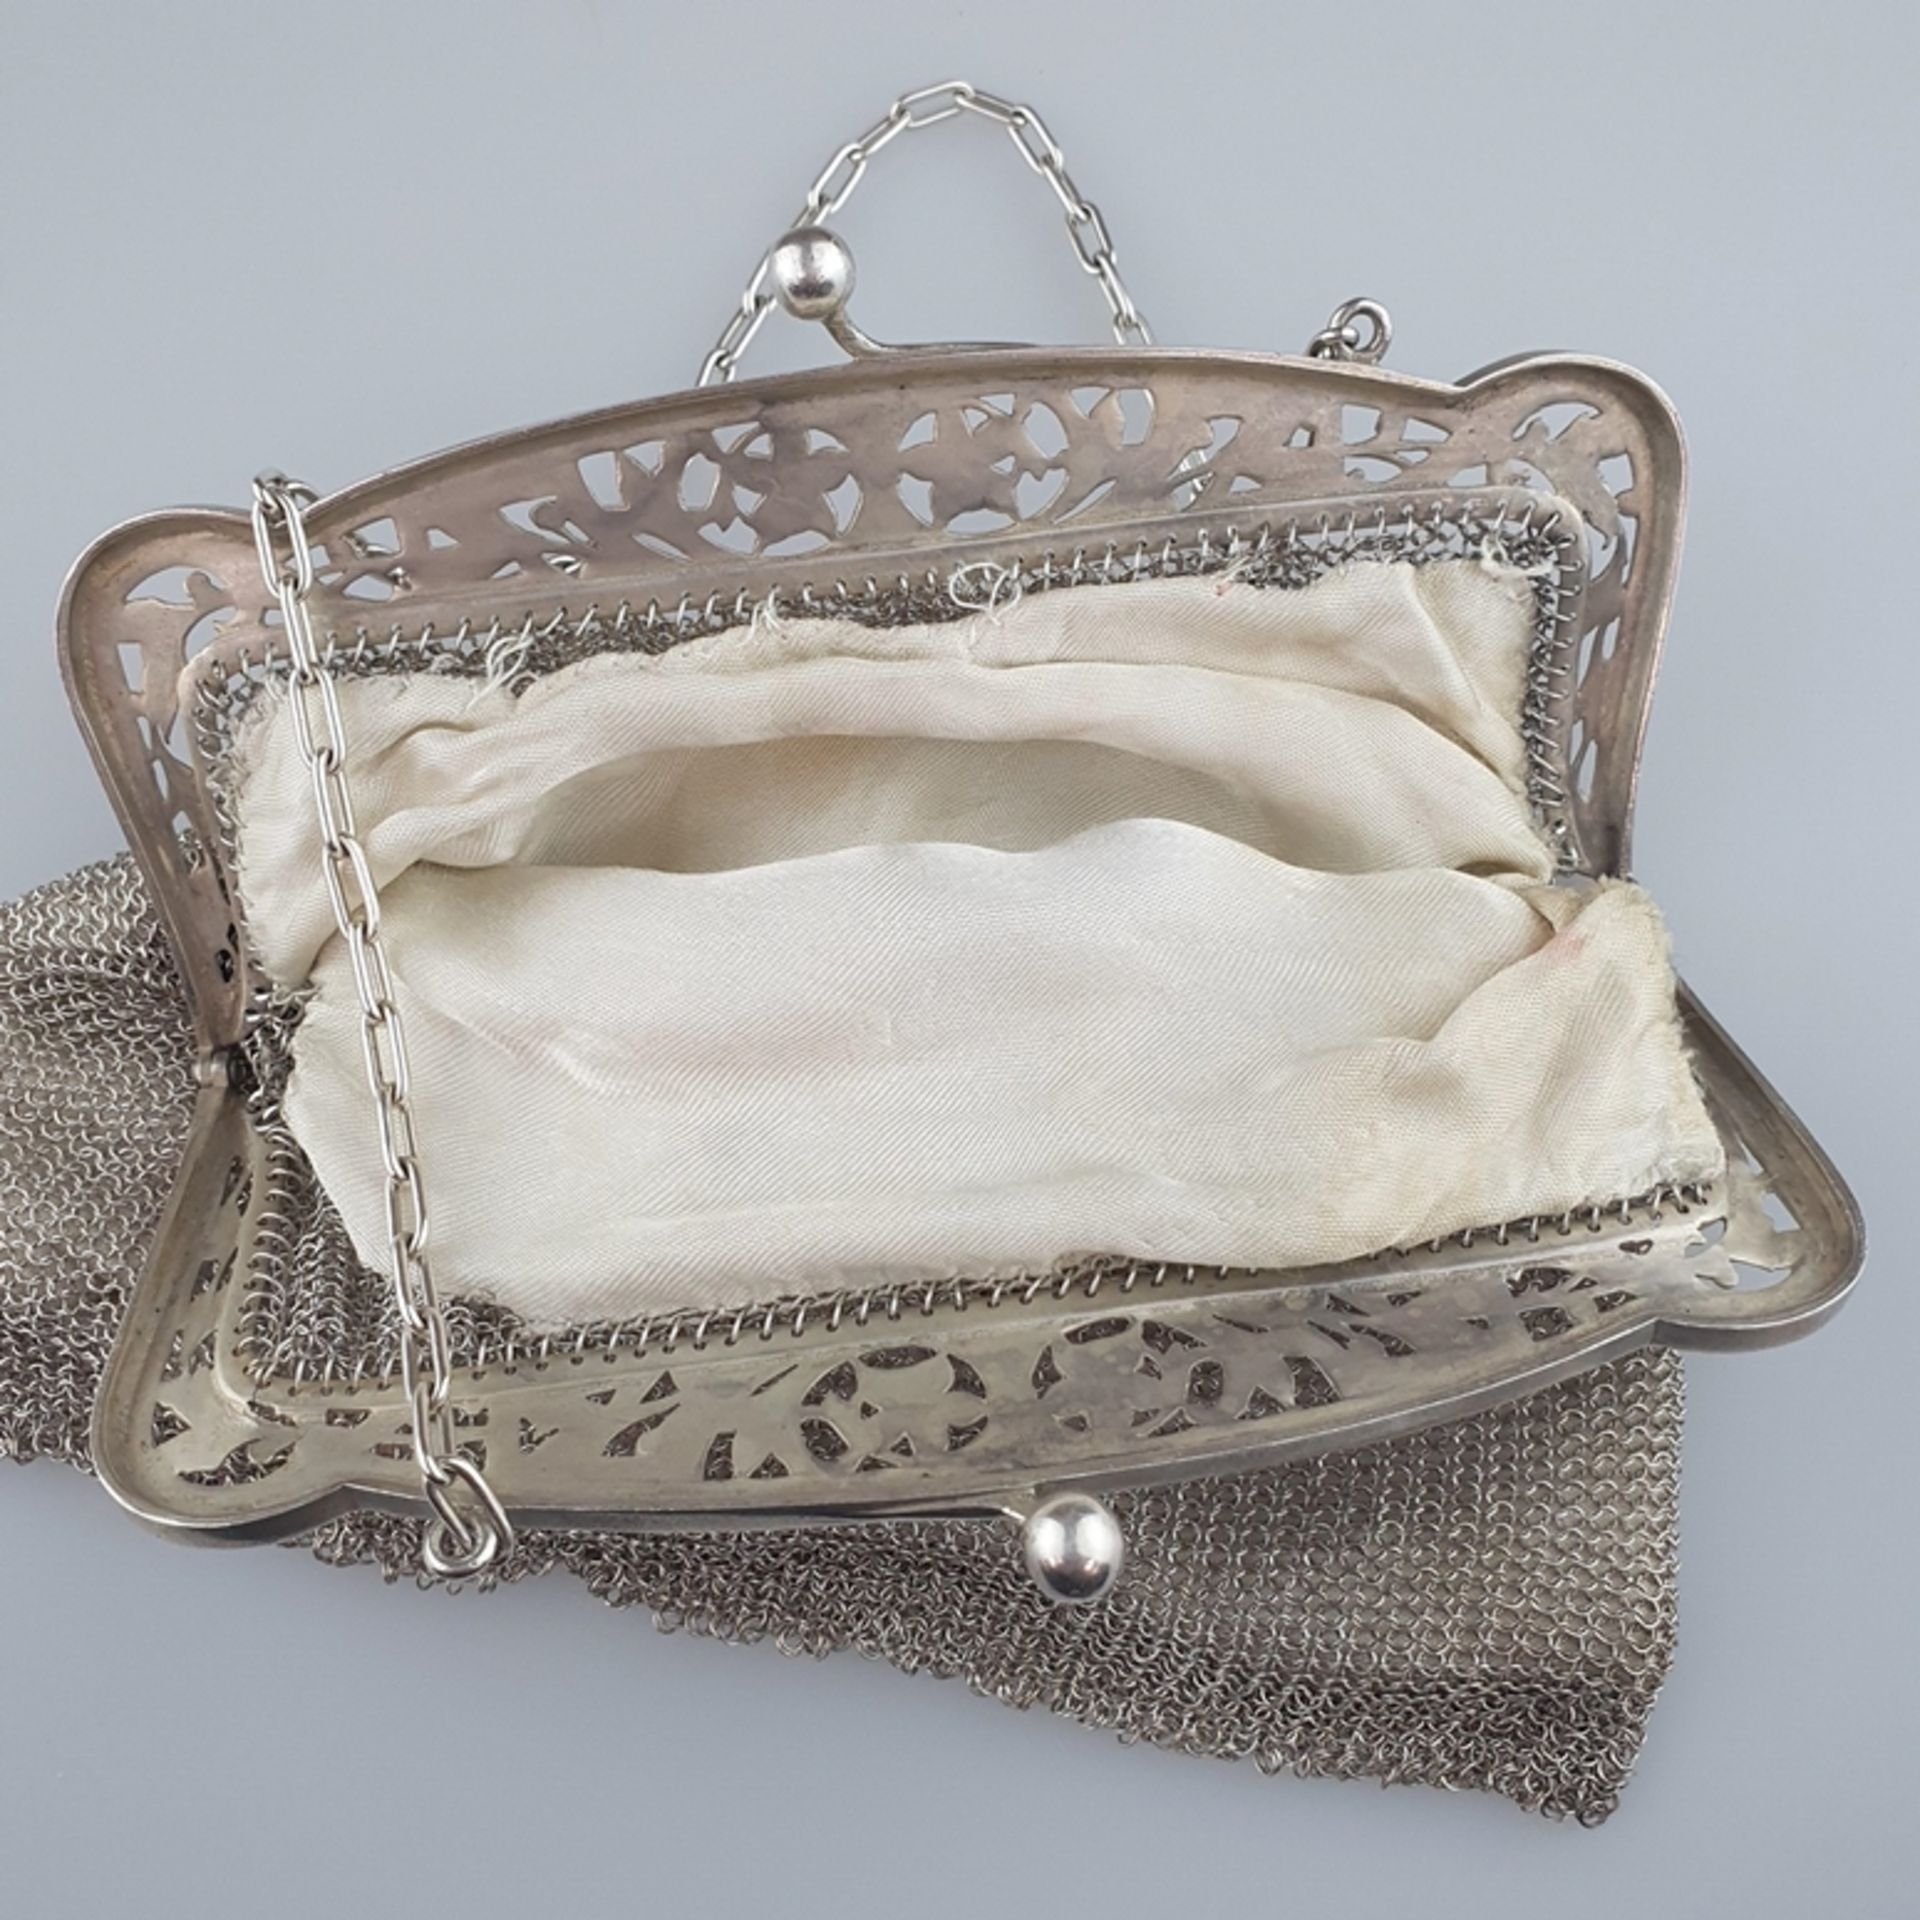 Kettentasche - um 1900, Silber, rechteckige Form aus fein verwirkten Kettenglie - Image 6 of 6